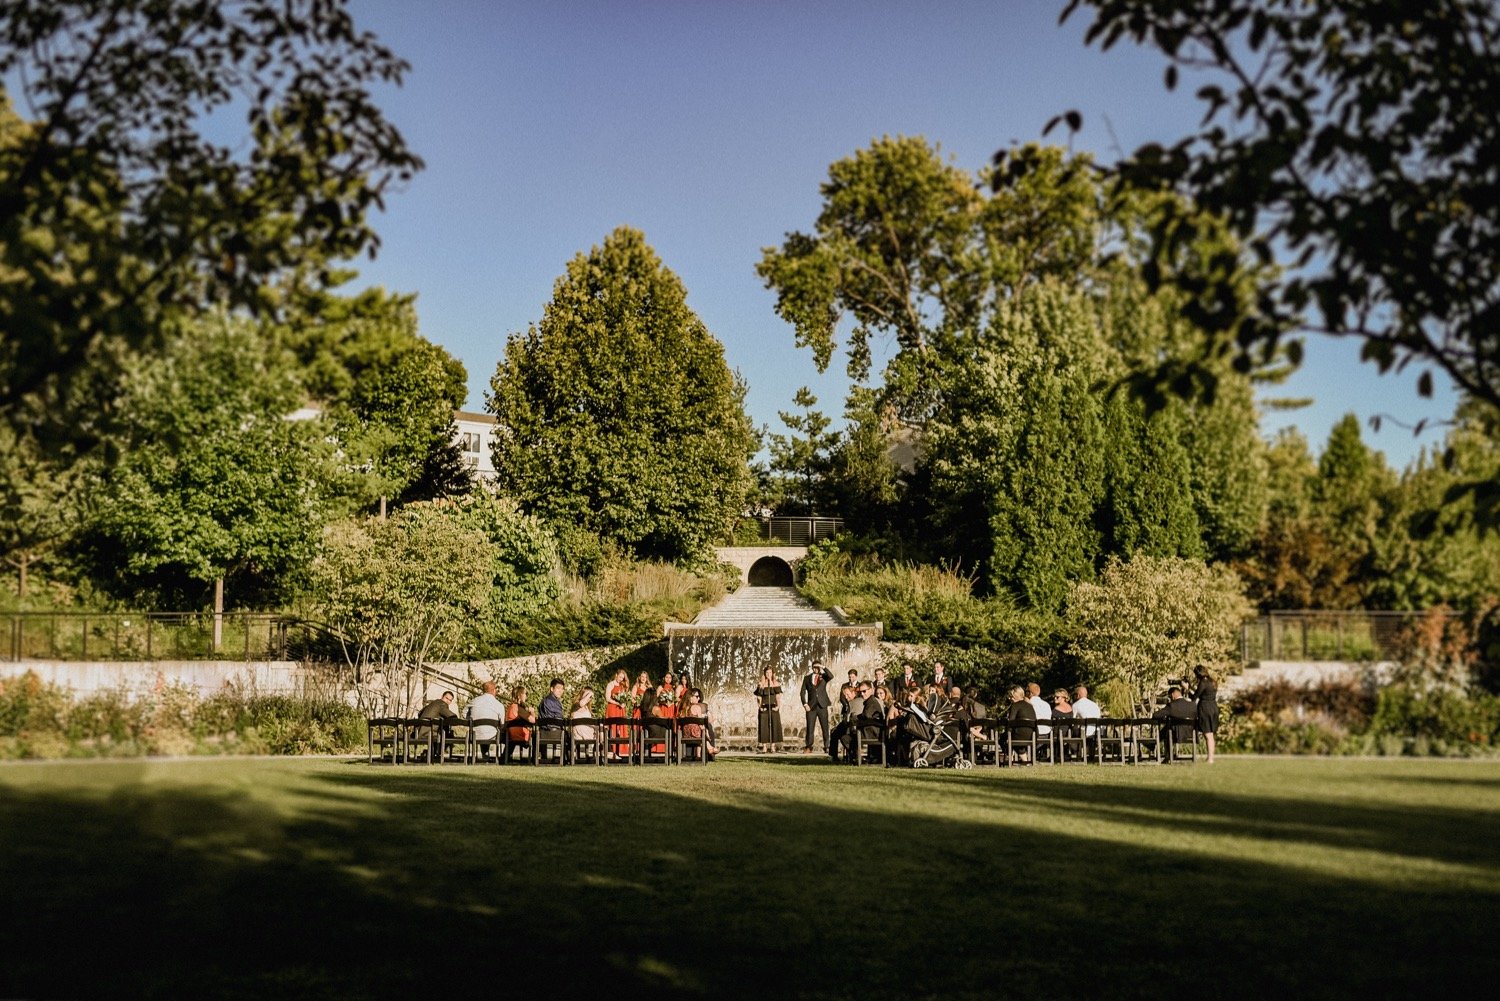 Outdoor-wedding-ceremony-at-Des-Moines-botanical-garden.jpg.jpg